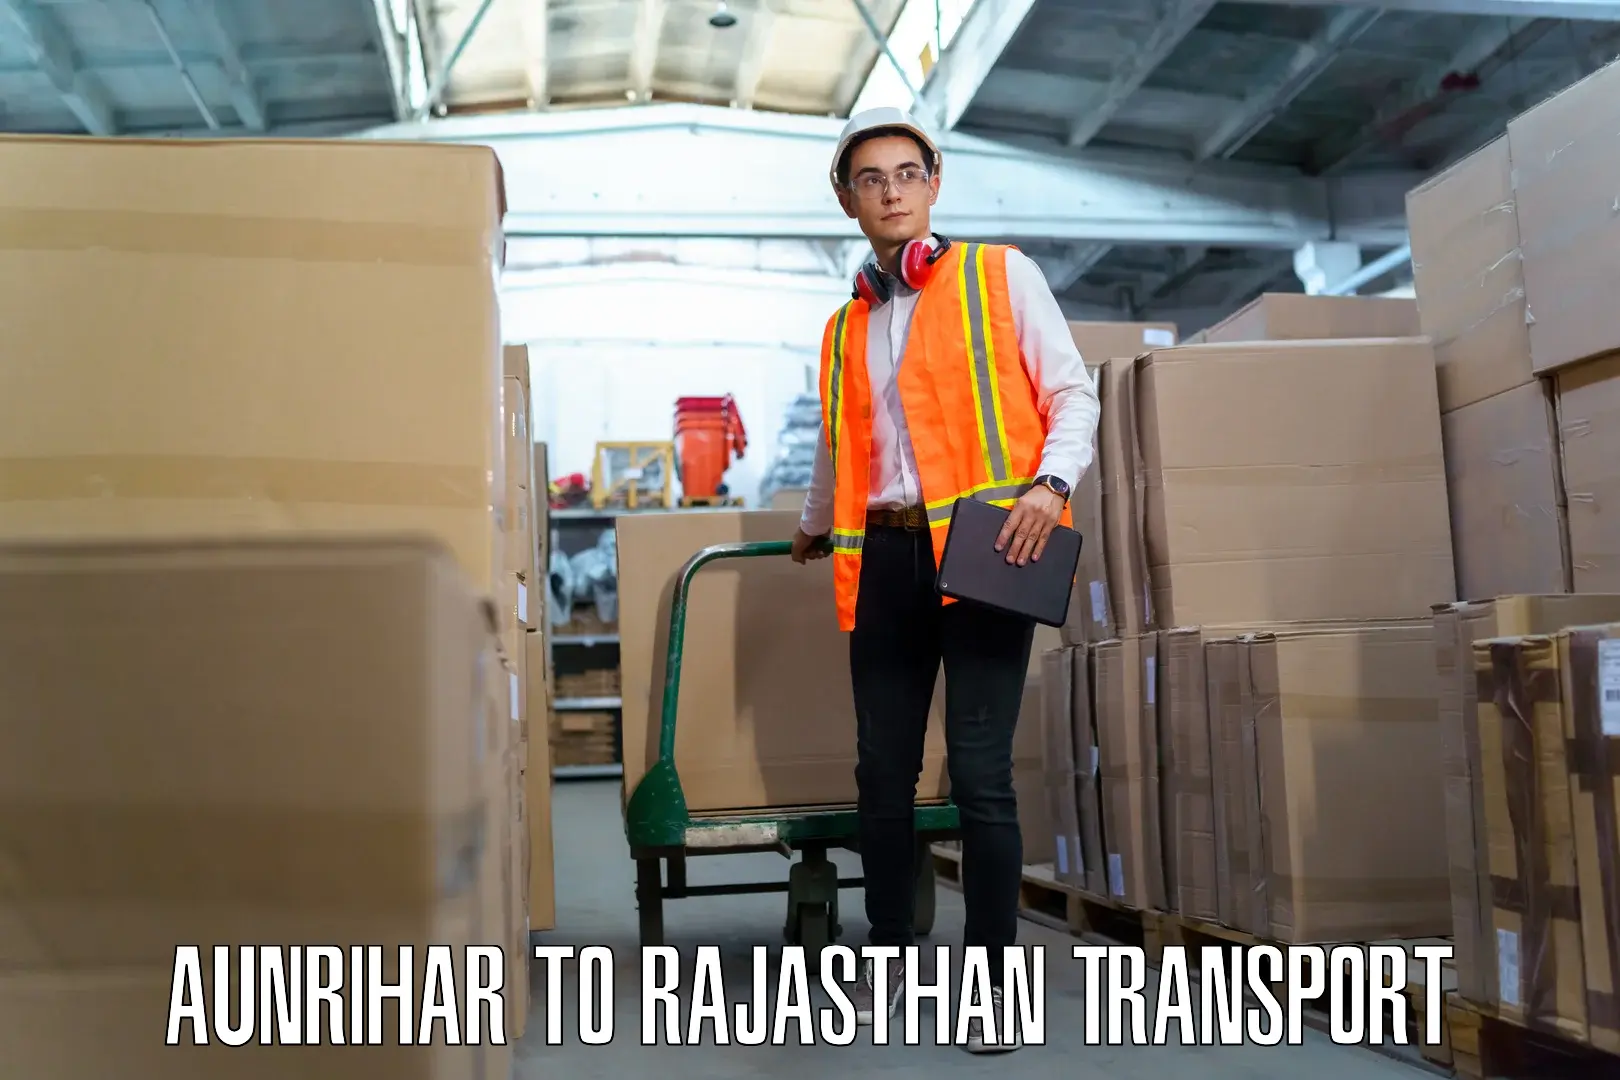 Goods delivery service Aunrihar to Jaipur